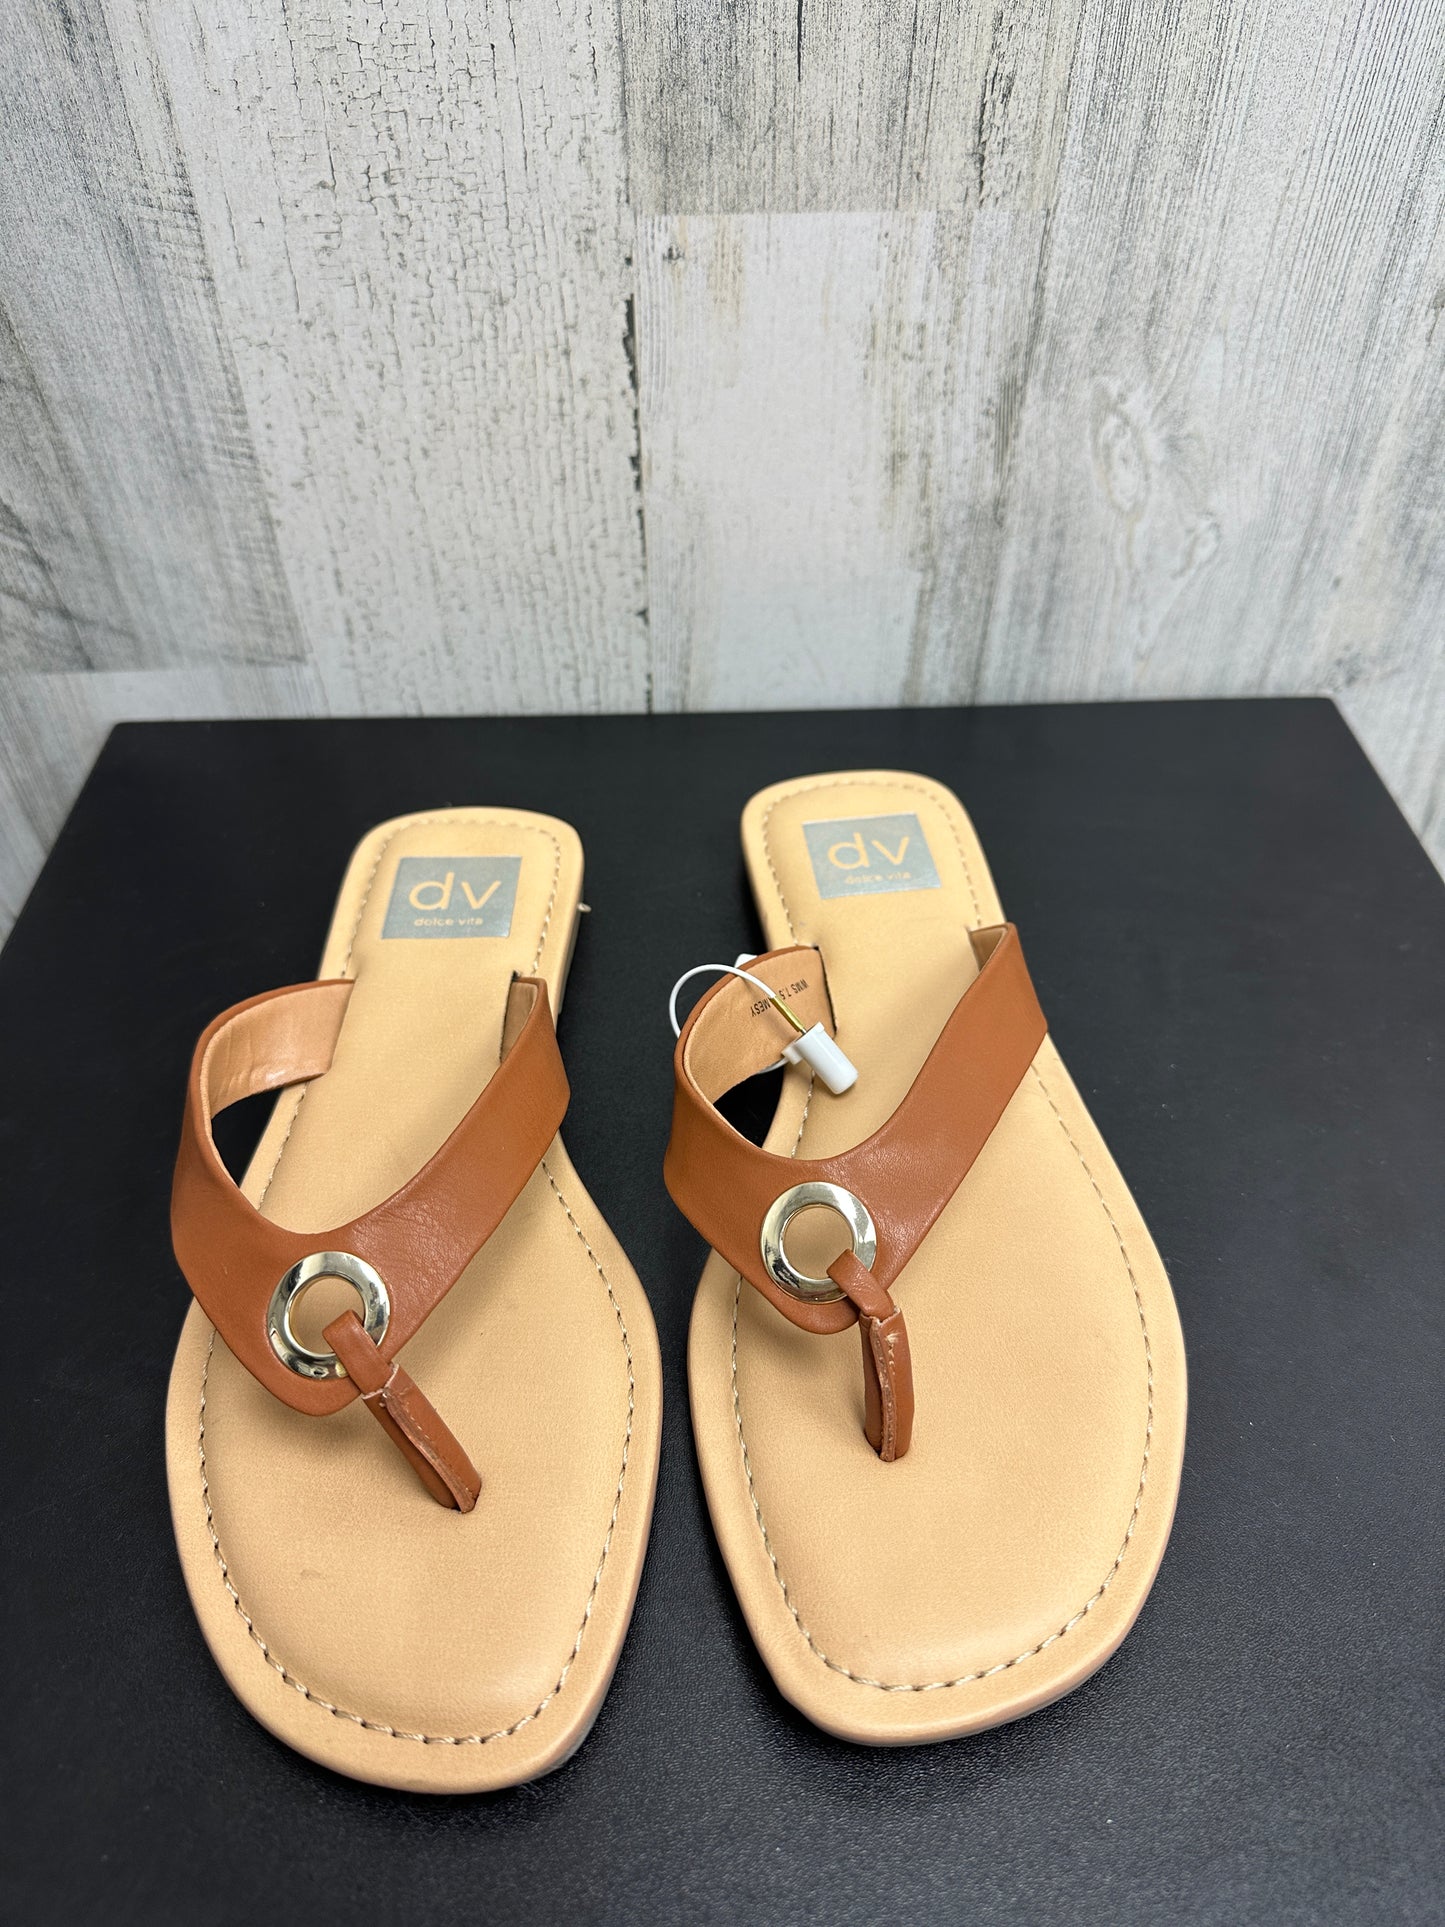 Sandals Flip Flops By Dolce Vita  Size: 7.5